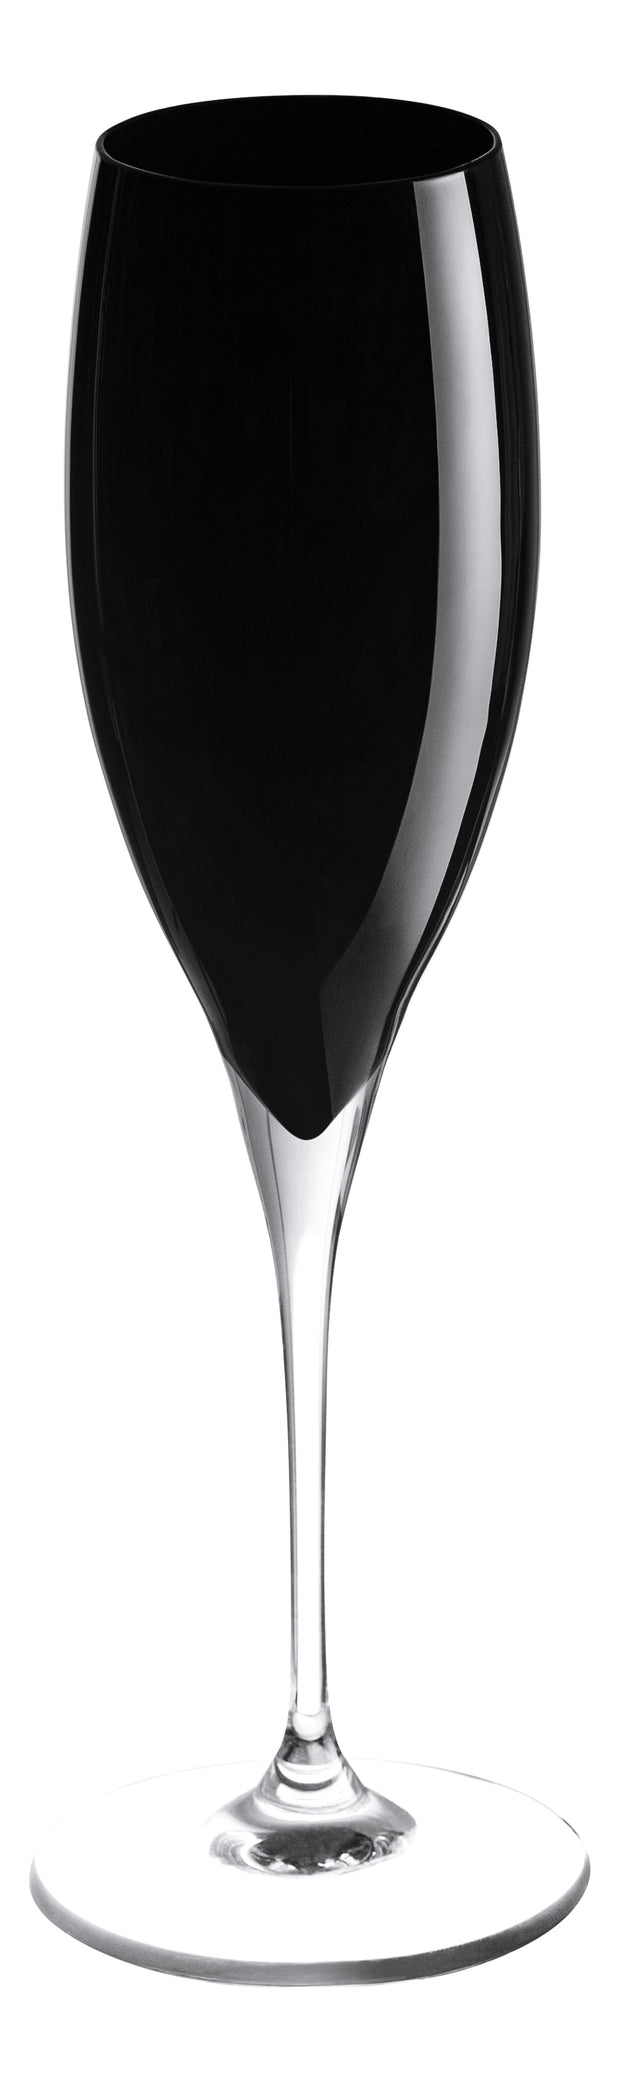 Opaque Black Champagne Flute, 11 oz. Set of 6